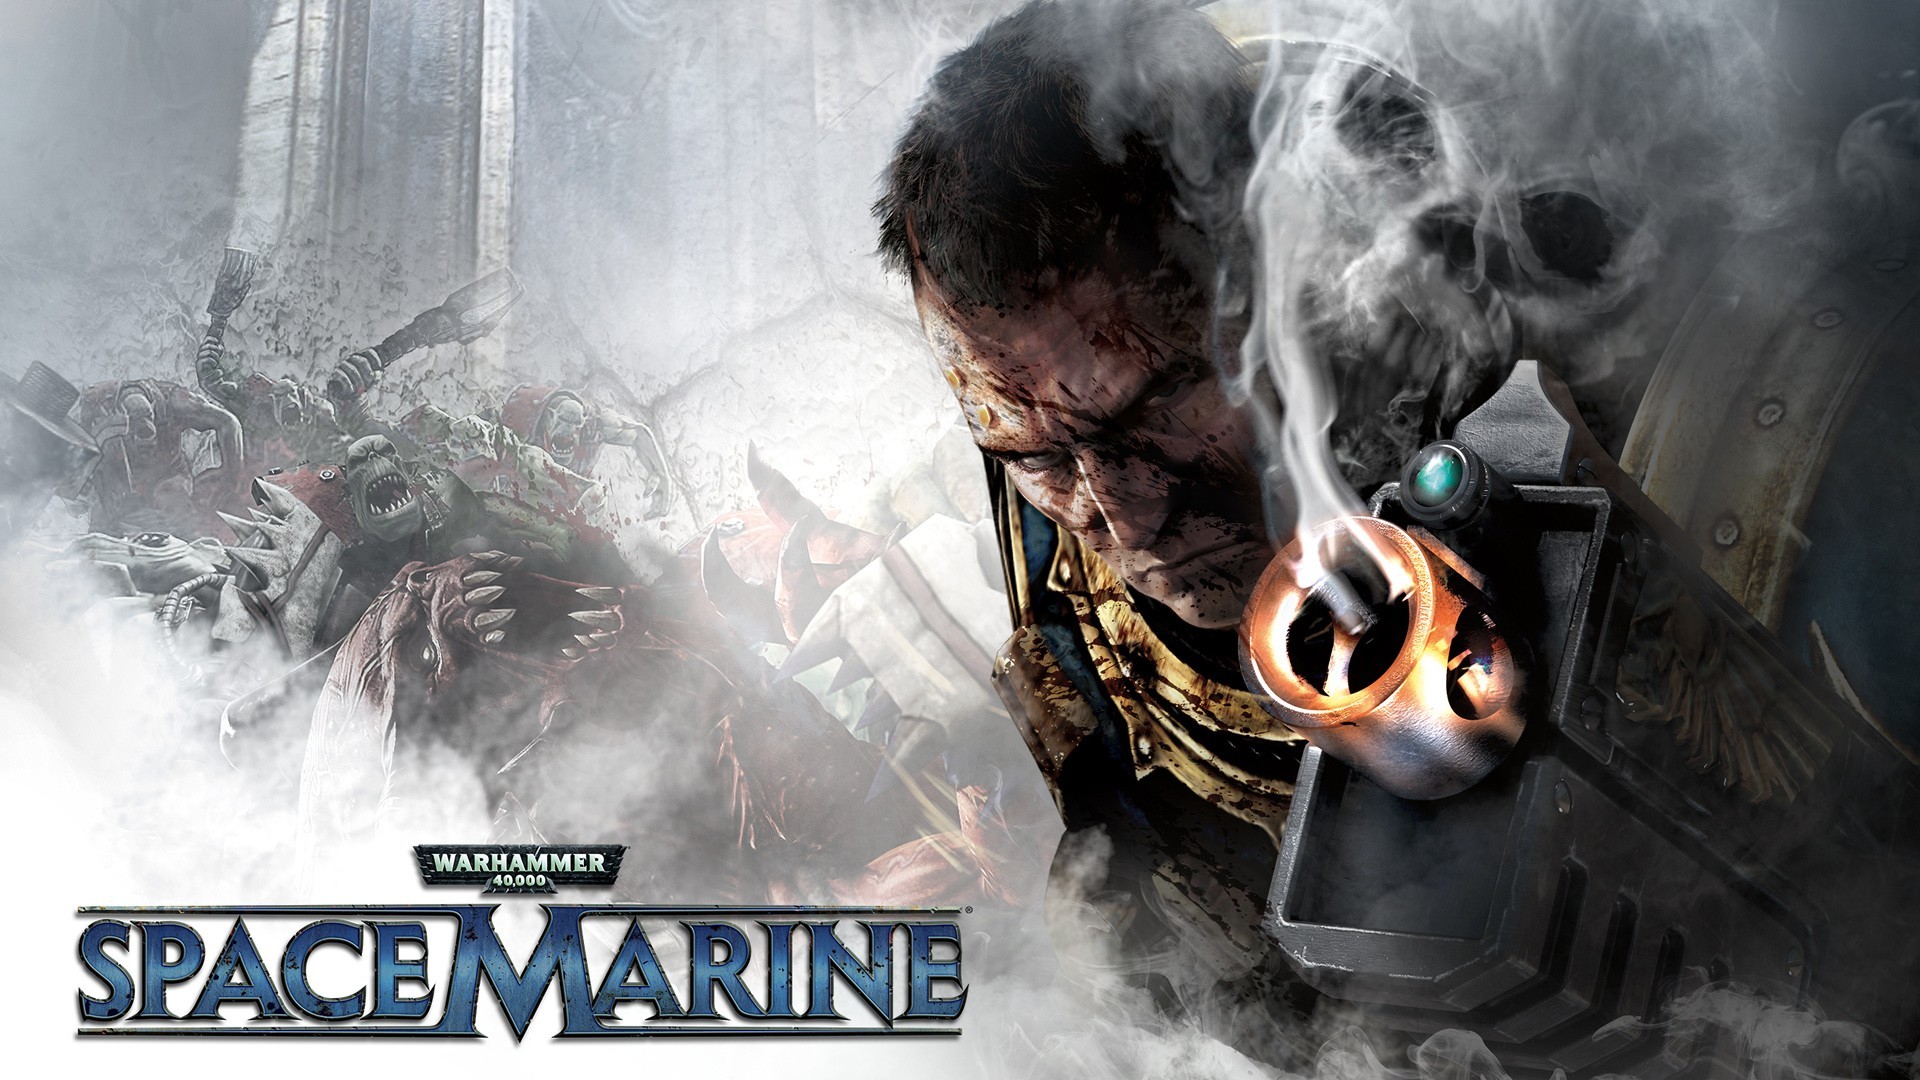 1920x1080 ... x 1080 Original. Description: Download Warhammer Space Marine Game  Games wallpaper ...